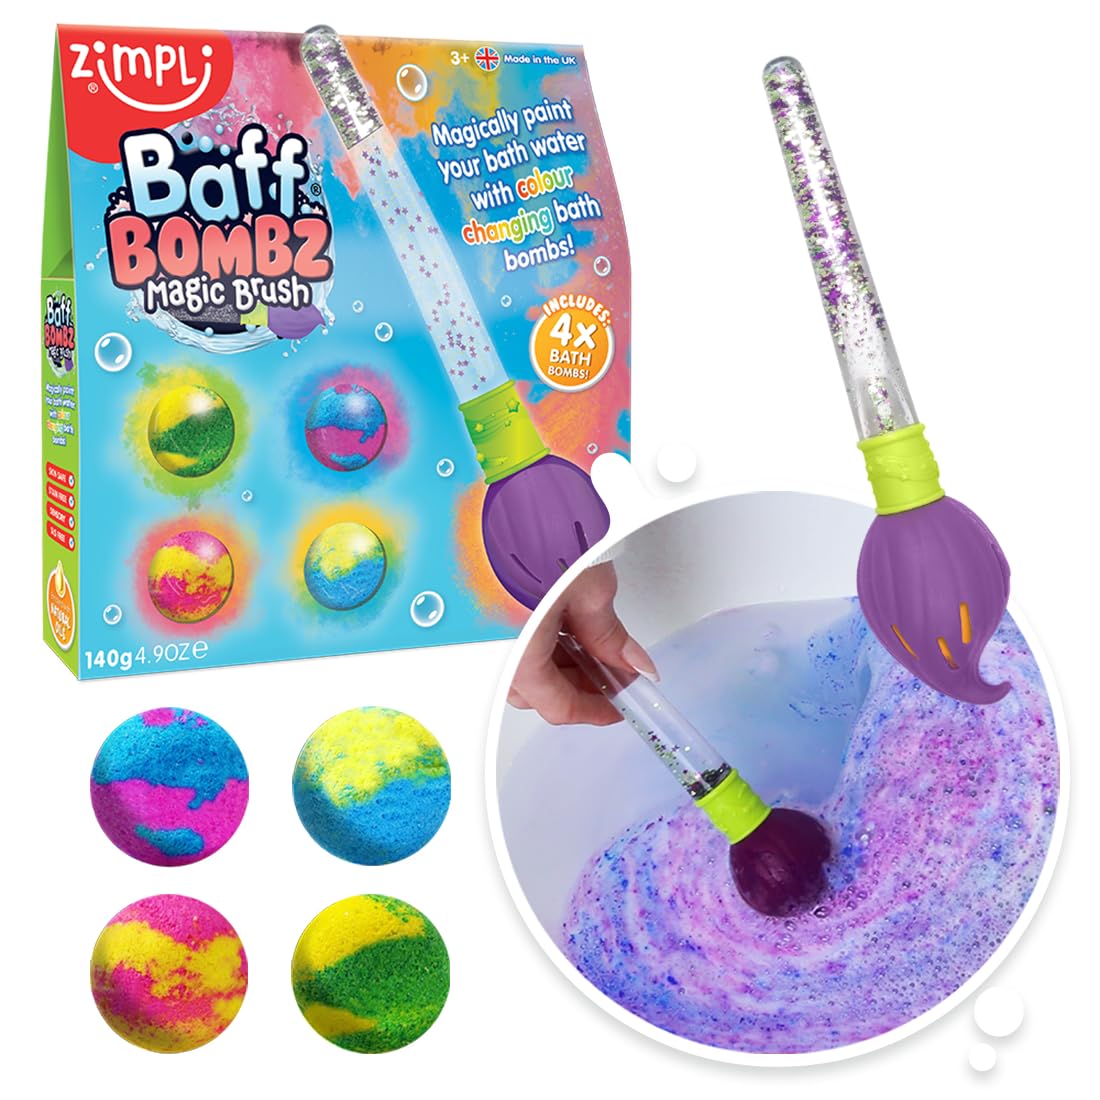 Baff Bombz Magic Brush from Zimpli Kids, 4 x Bath Bombs, Magically Paint your Bath Water, Pocket Money Creative Toy for Children, Birthday Gifts for Boys & Girls , Moisturising Fizzers